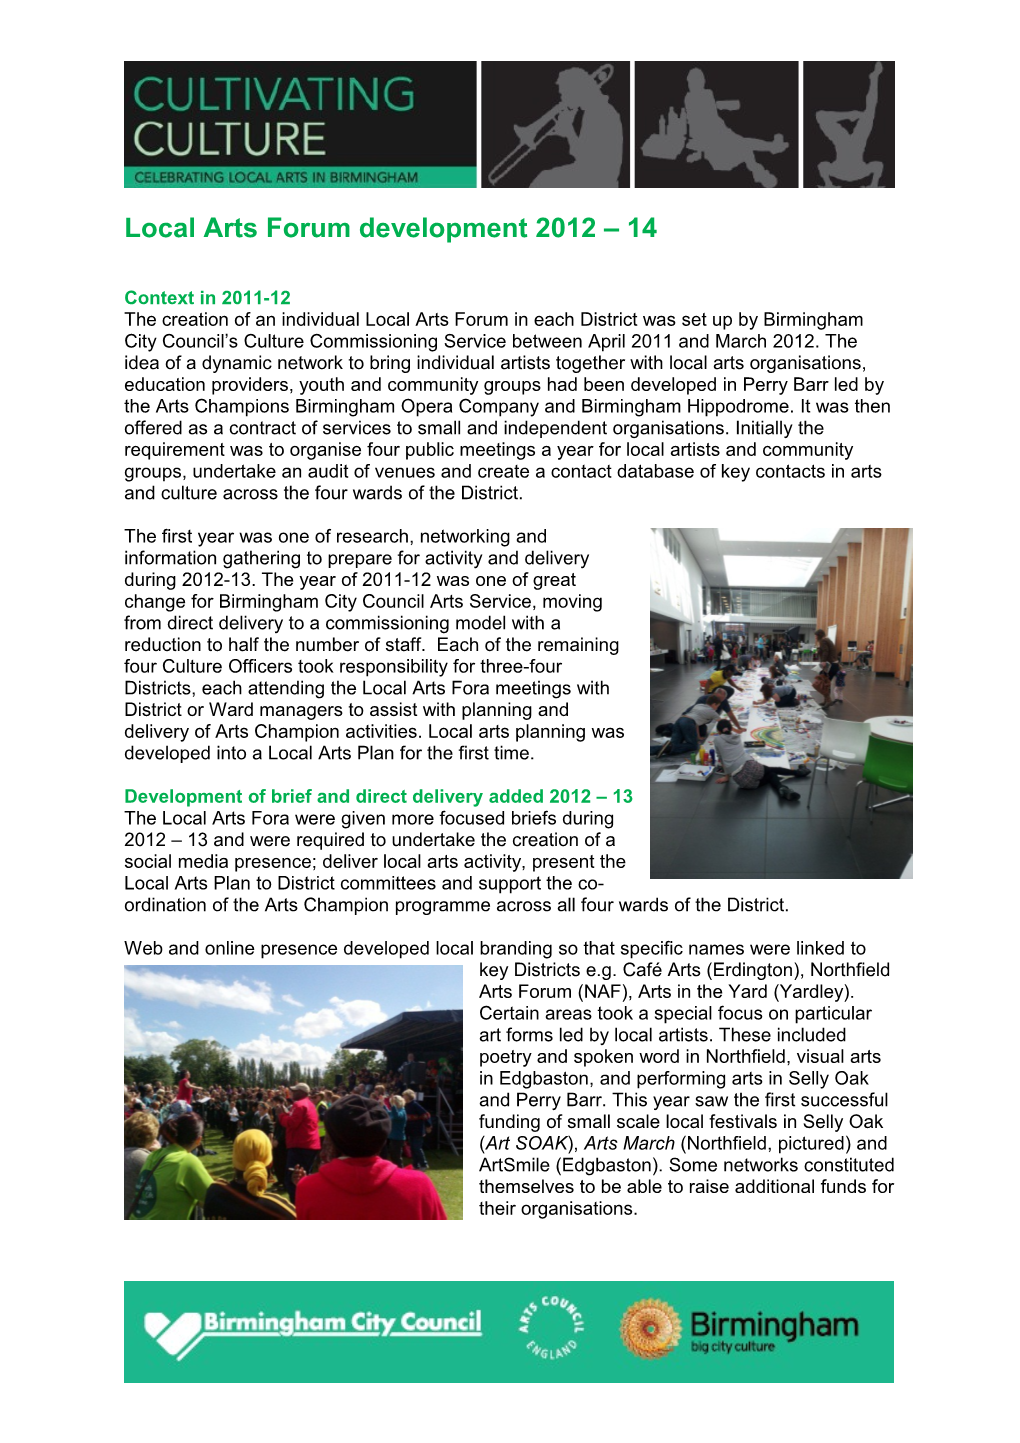 Local Arts Forum Development 2012 14